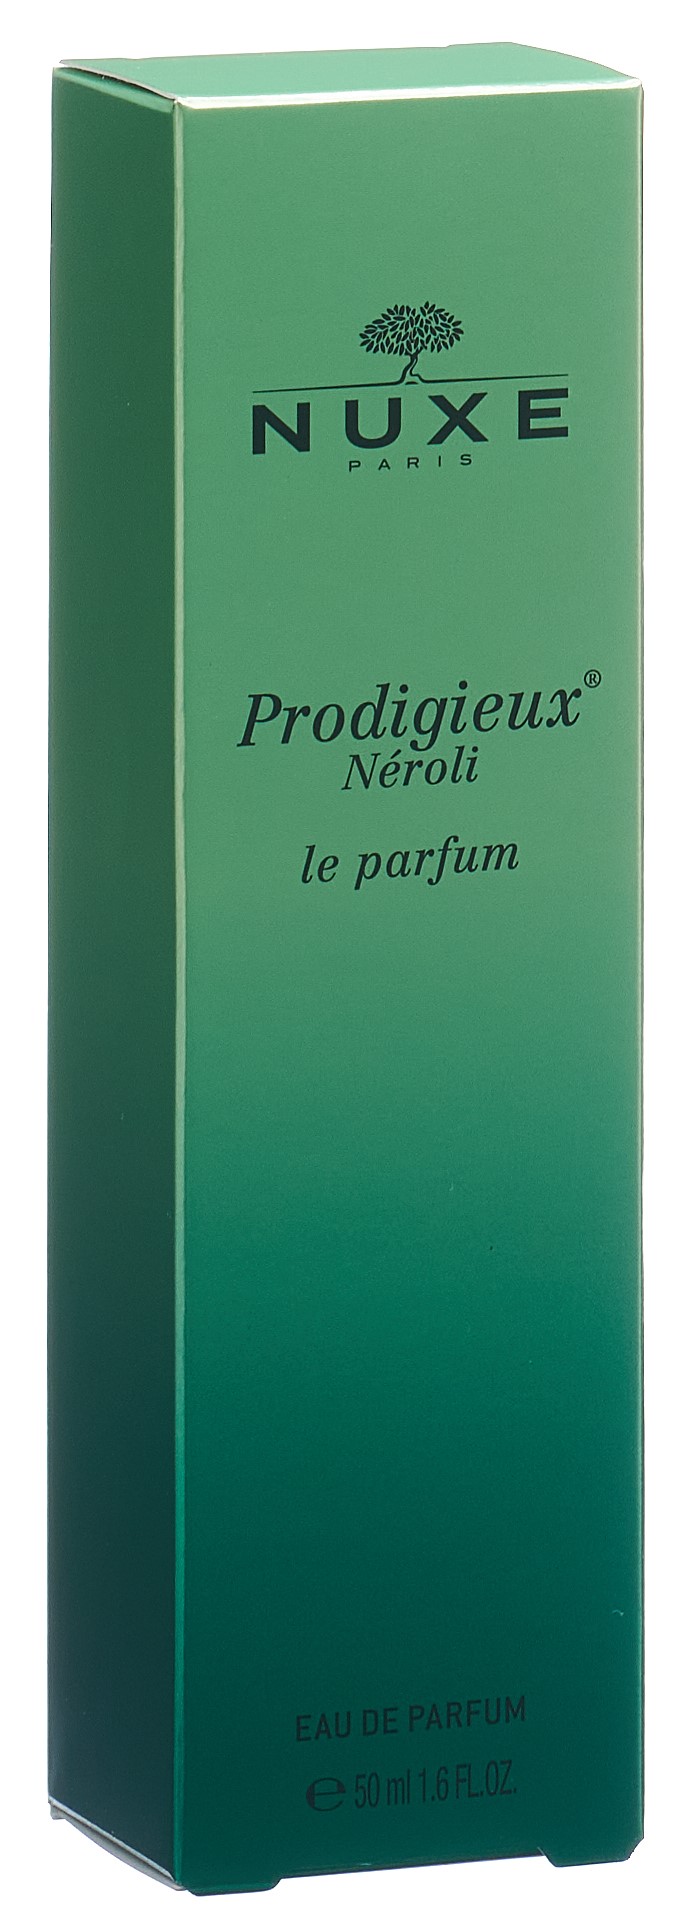 NUXE Prodigieux Neroli Parfum 50 ml